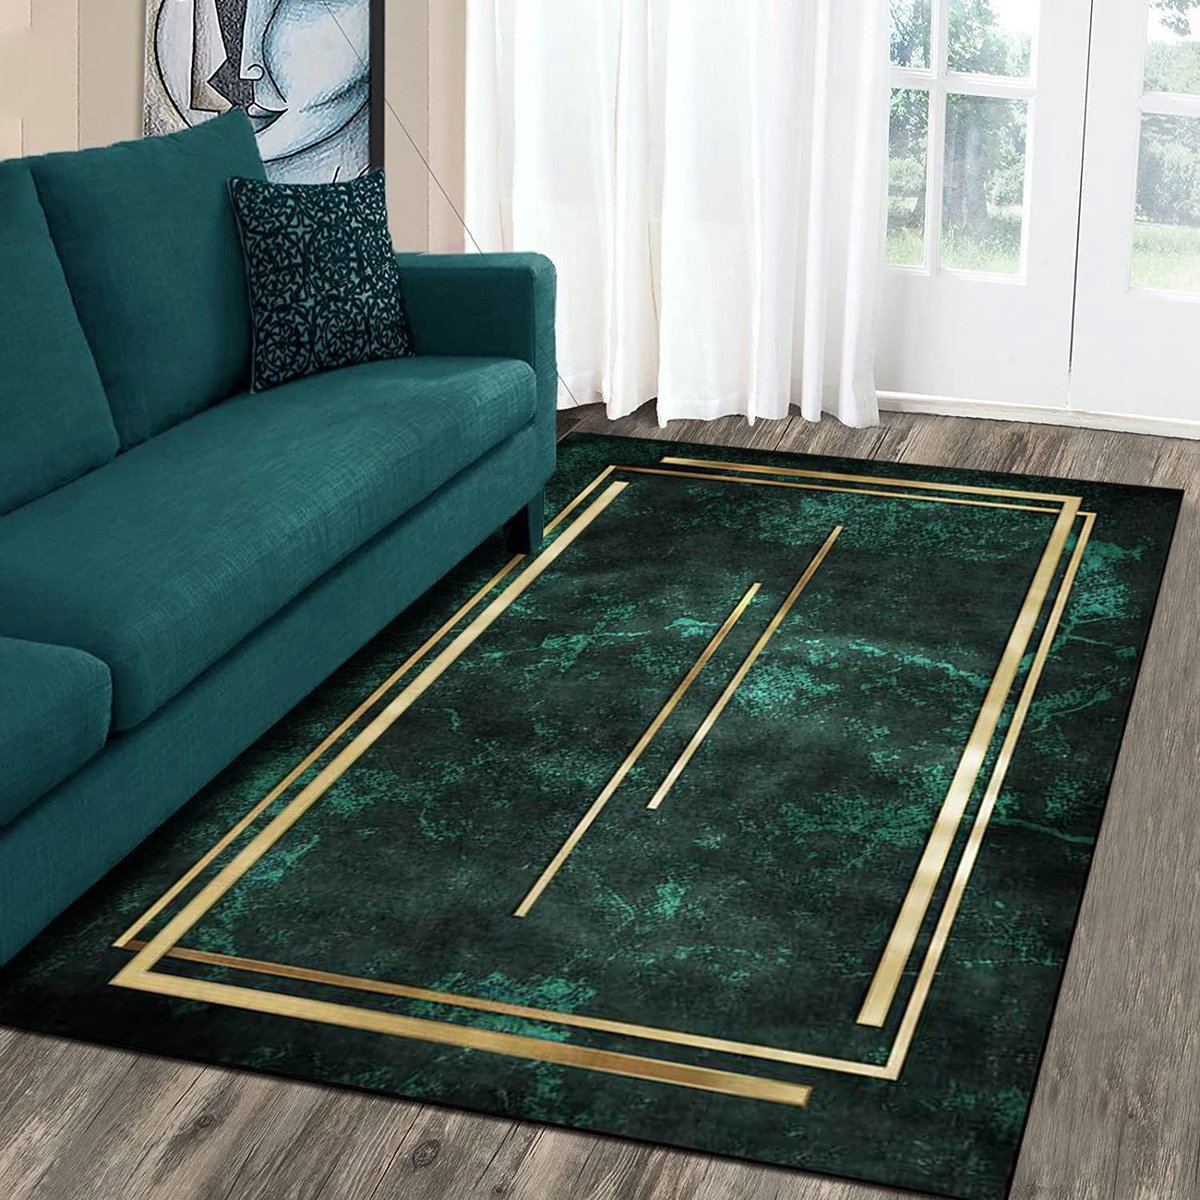 Tapiso silk tapis salon chambre vert foncé antidérapant poil long